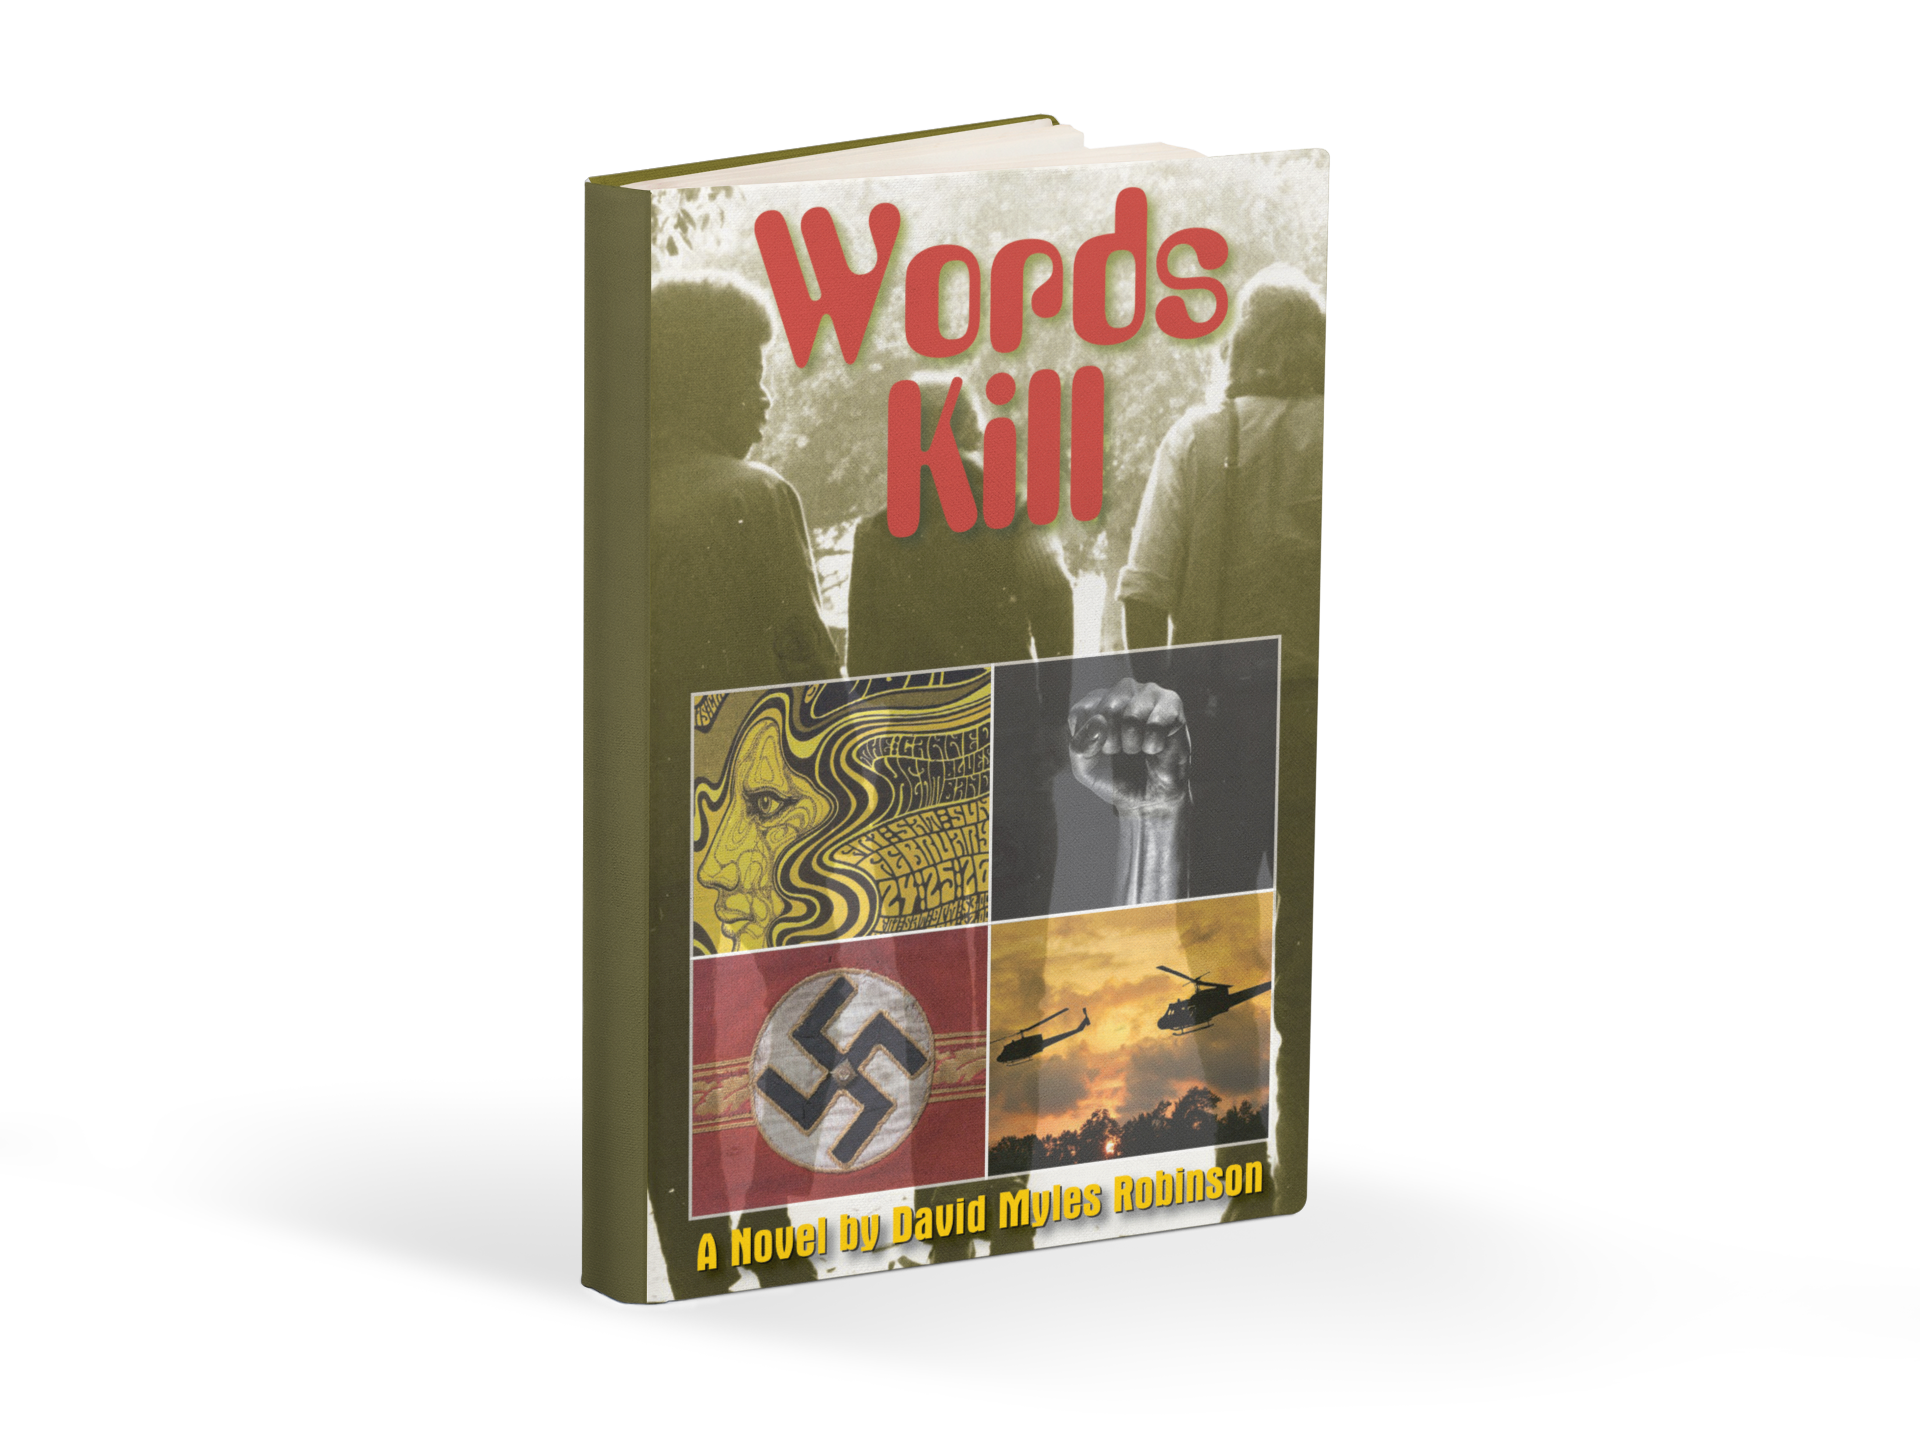 David Myles Robinson’s, Words Kill Explores History and Social Politics by Way of An Urgent, Addictive Suspense Thriller